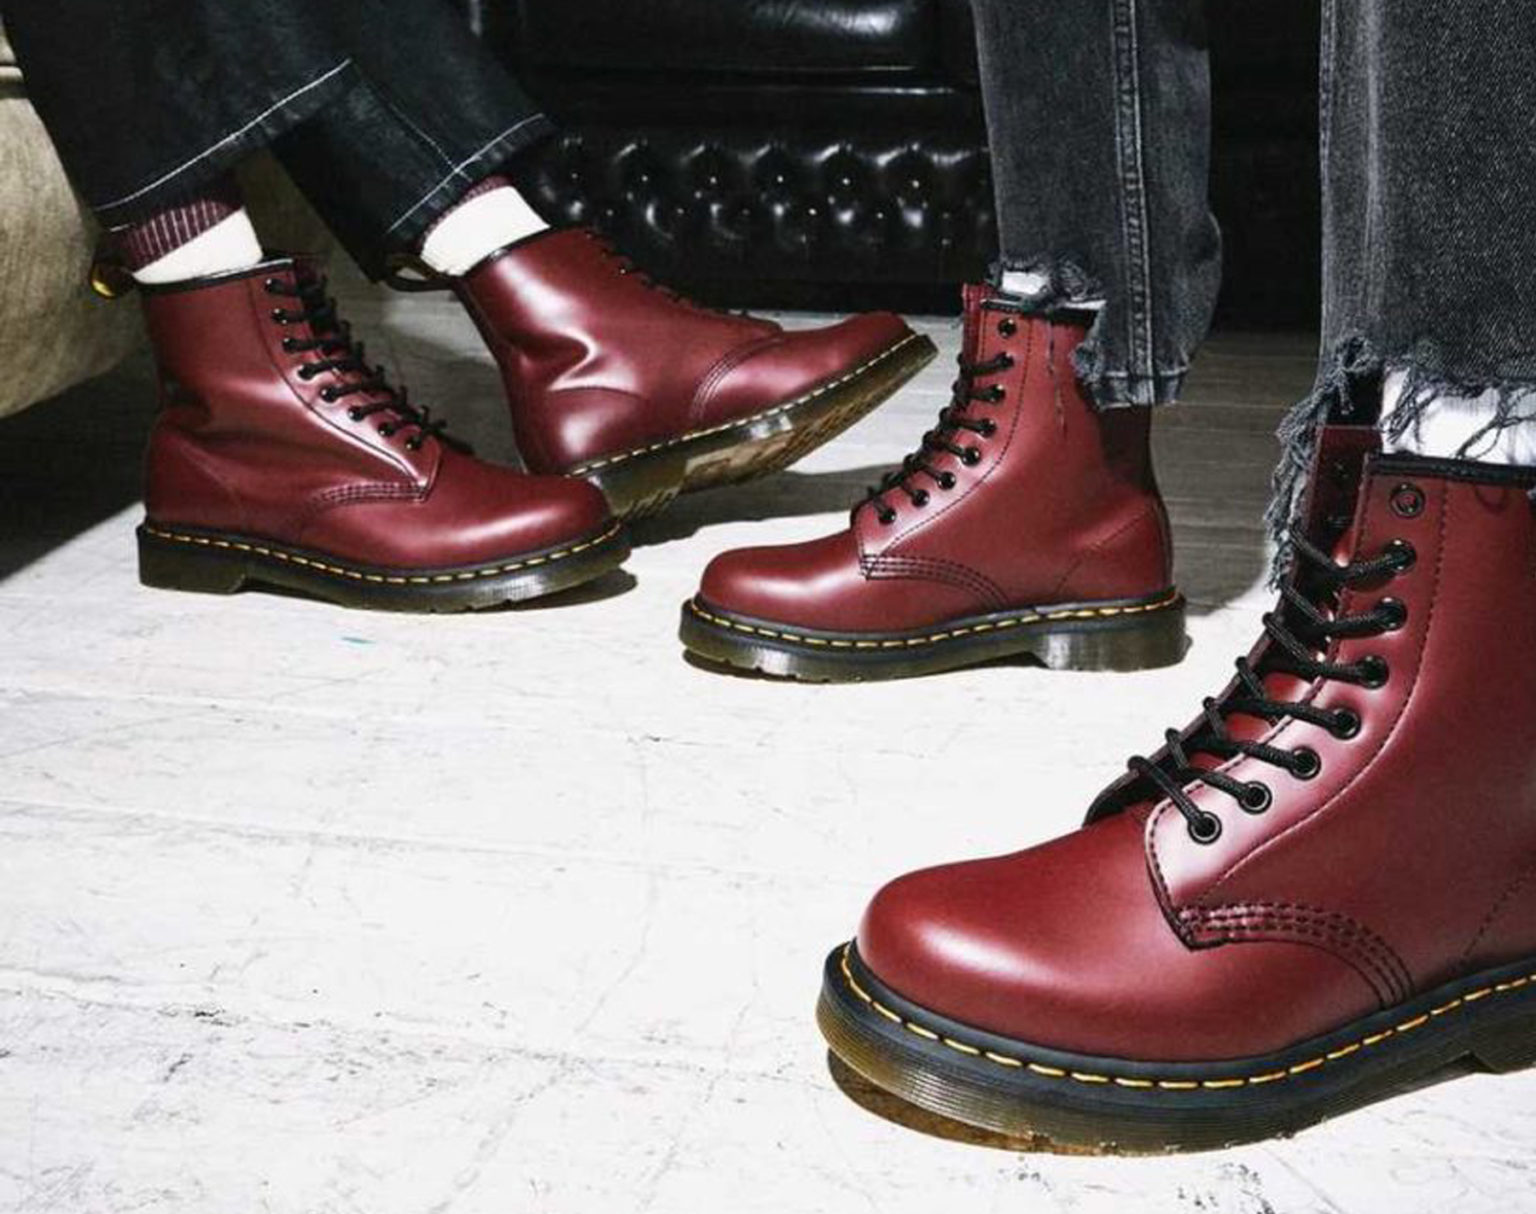 Celebrating six decades of the Original Docs footwear – Garage